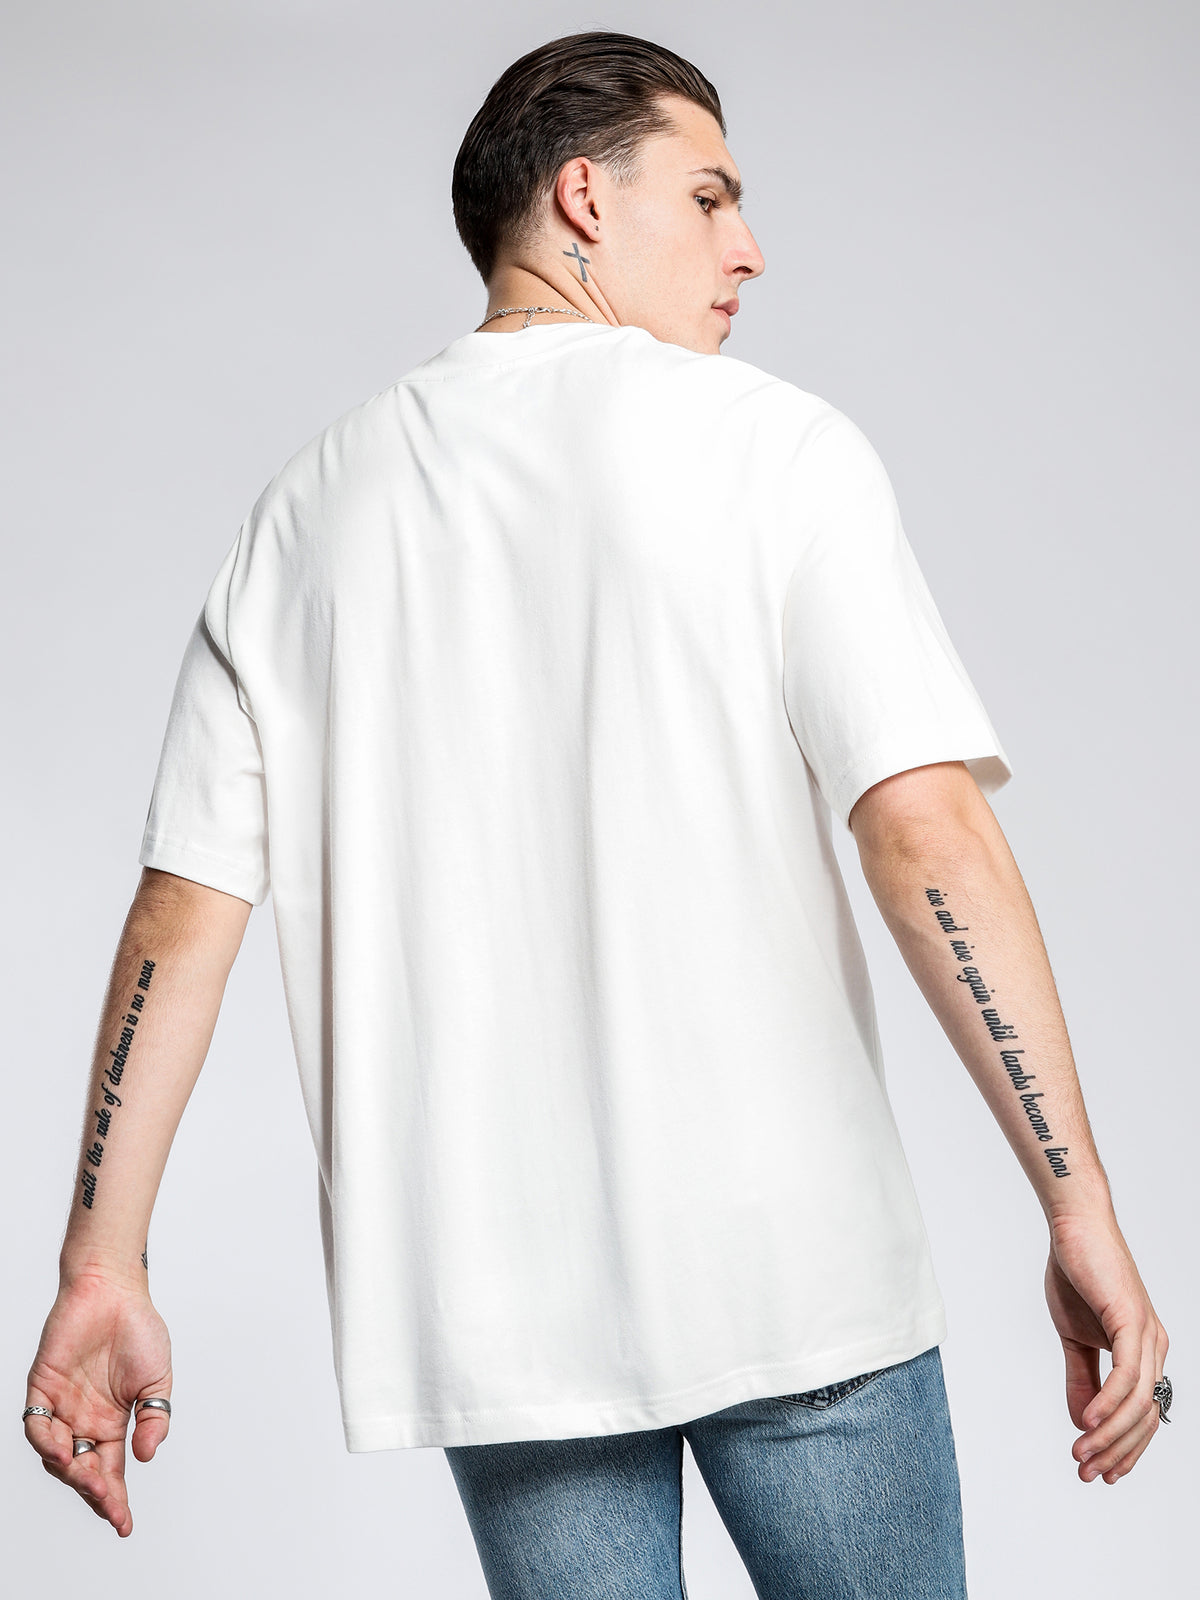 Originals Oversized Logo T-Shirt in White